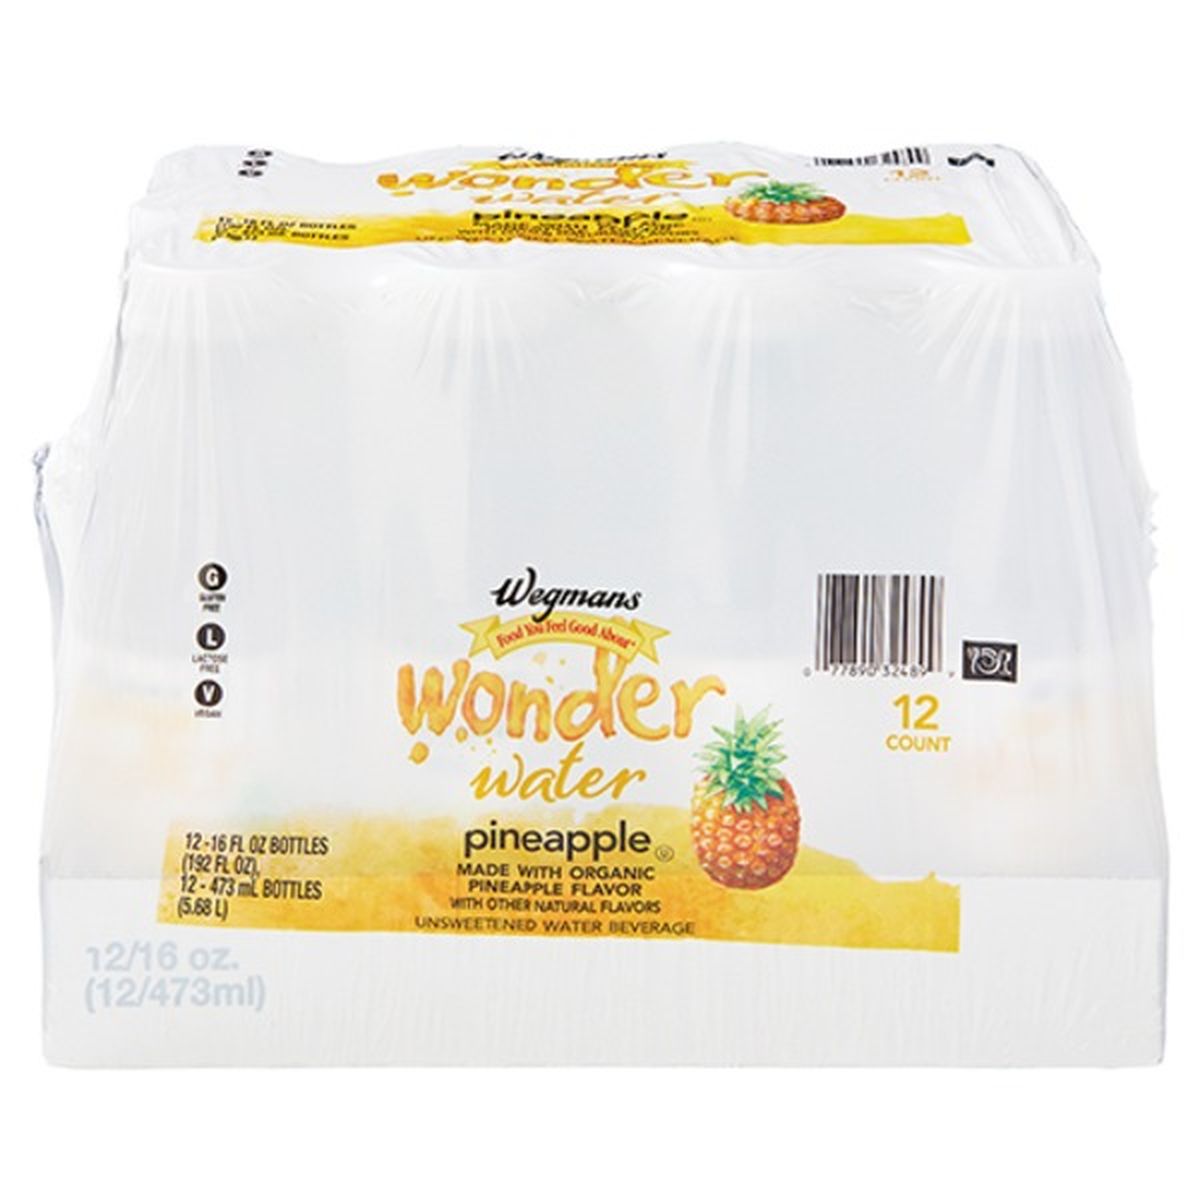 Calories in Wegmans Wonder Water Pineapple, 12 Pack